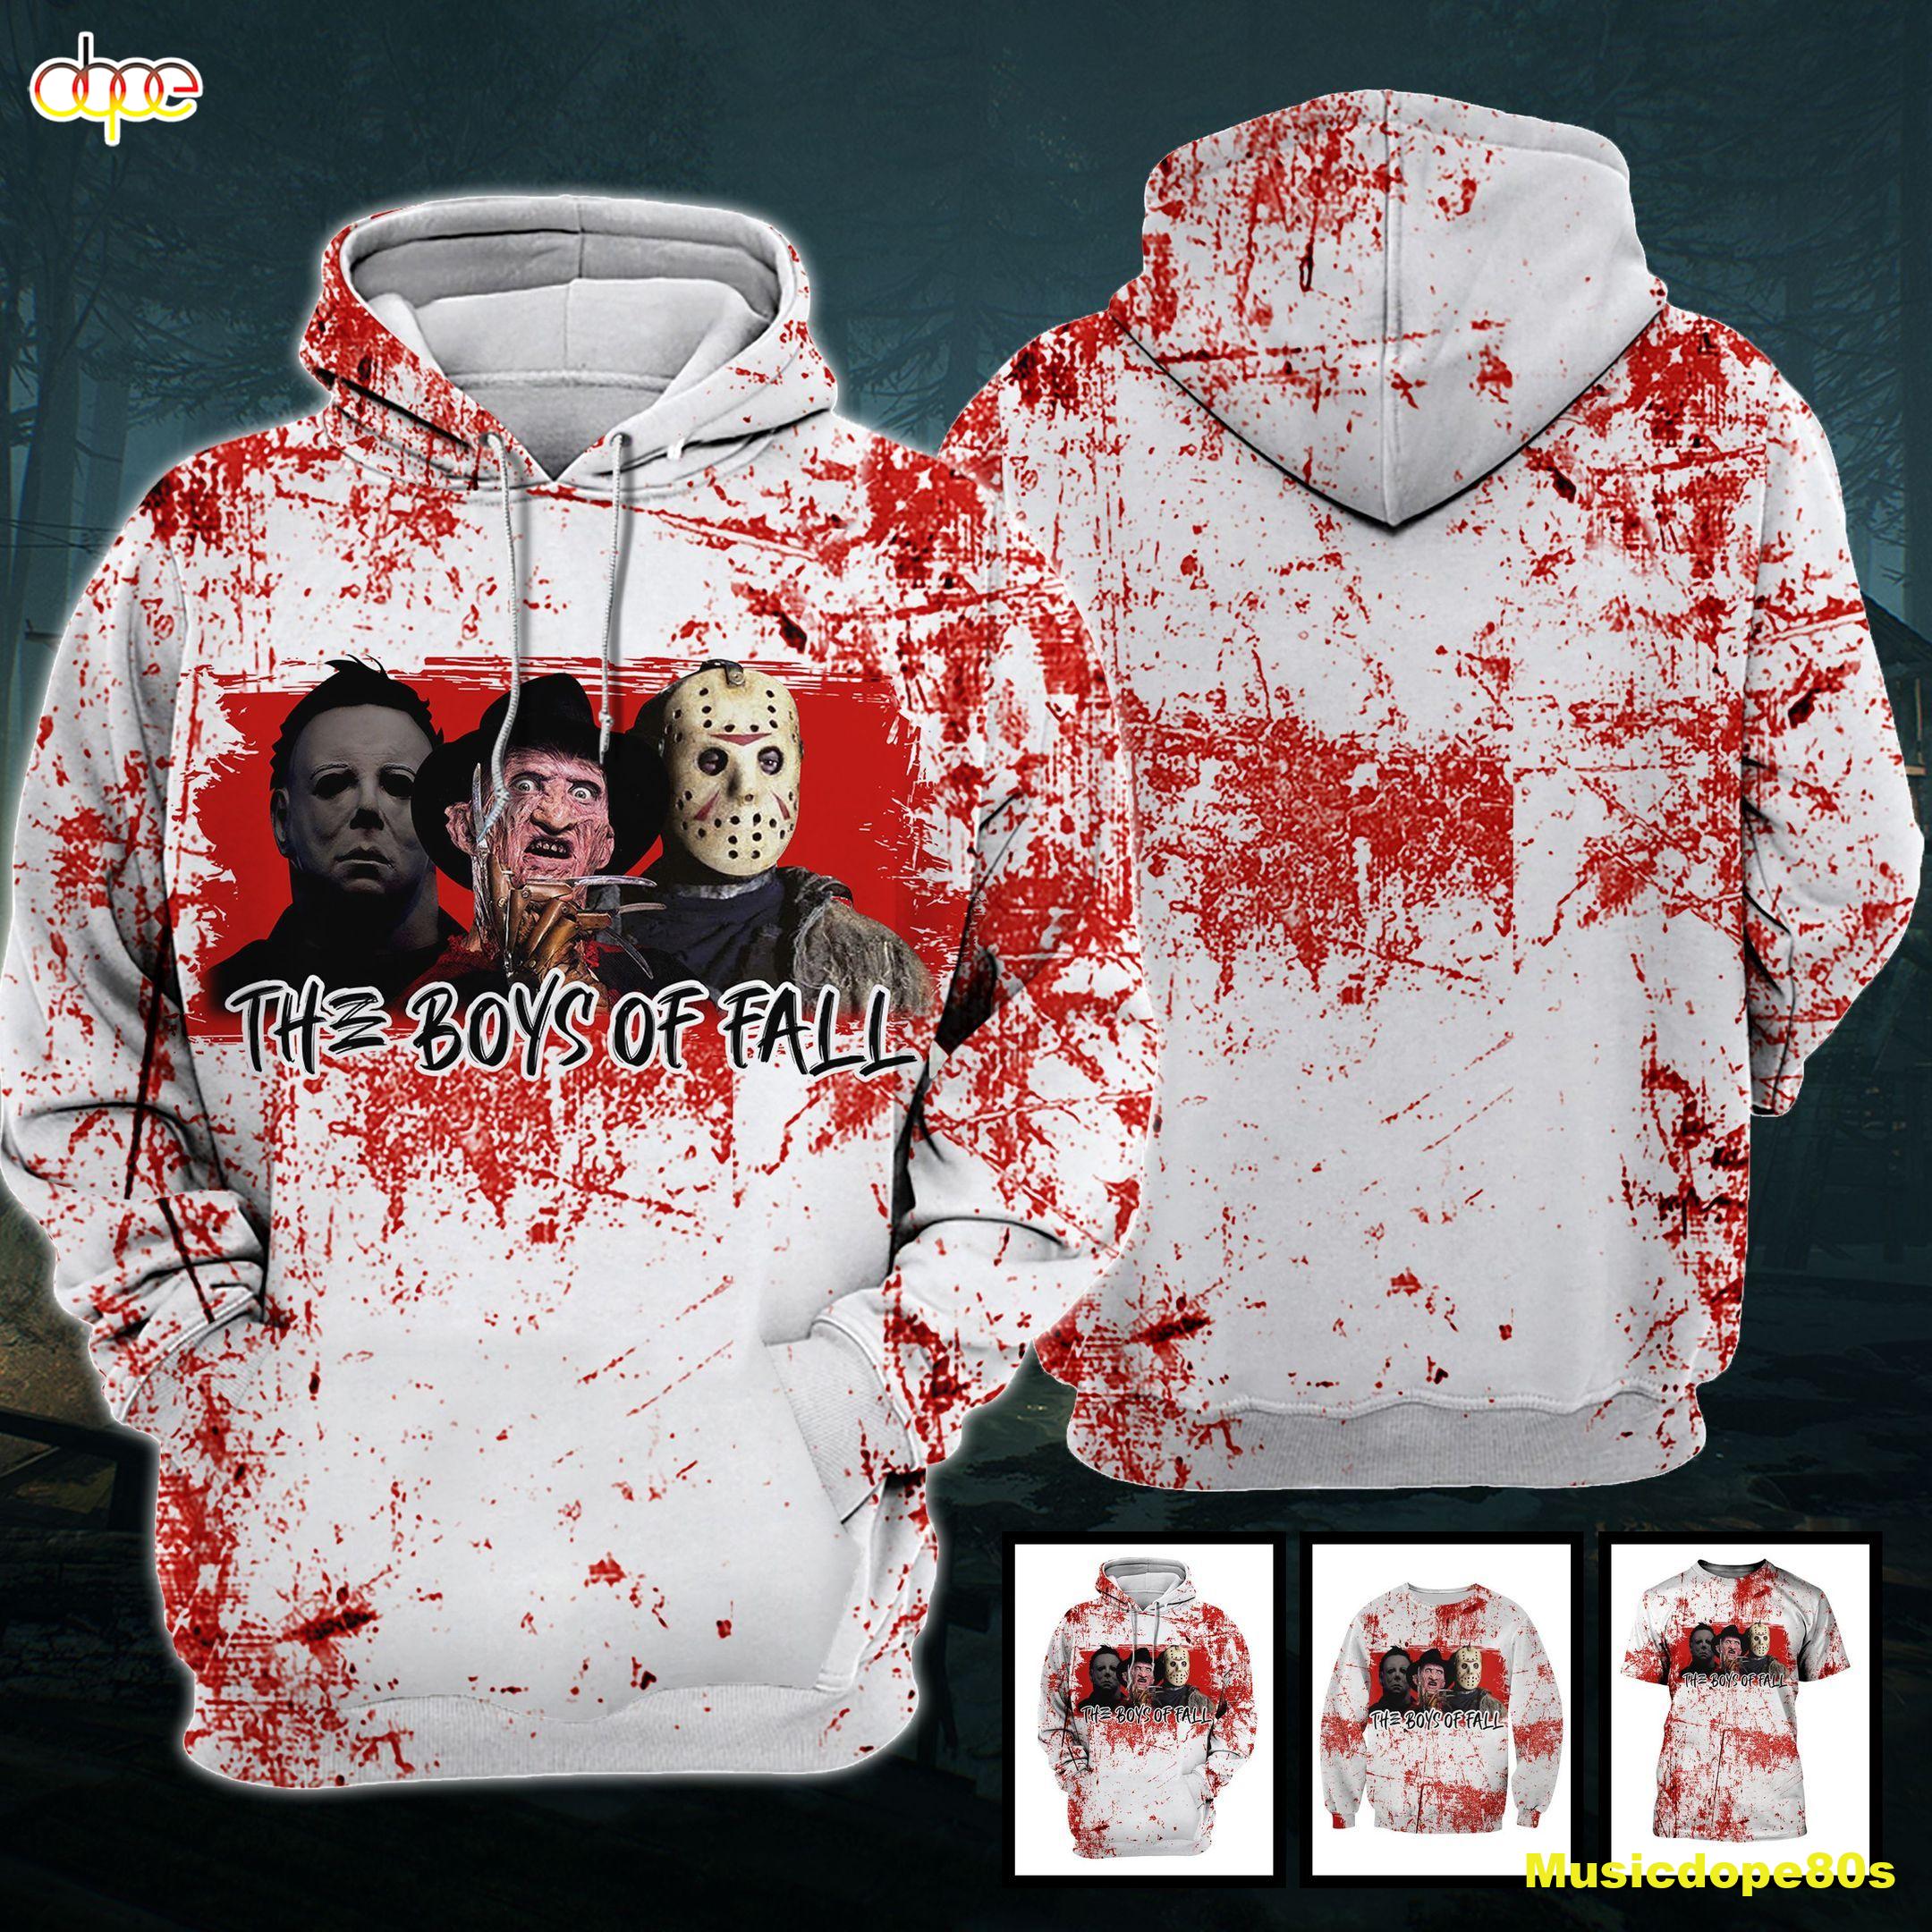 Michael Jason Freddy The Boys Of Fall Horror Movie Halloween All Over Print 3D Shirt